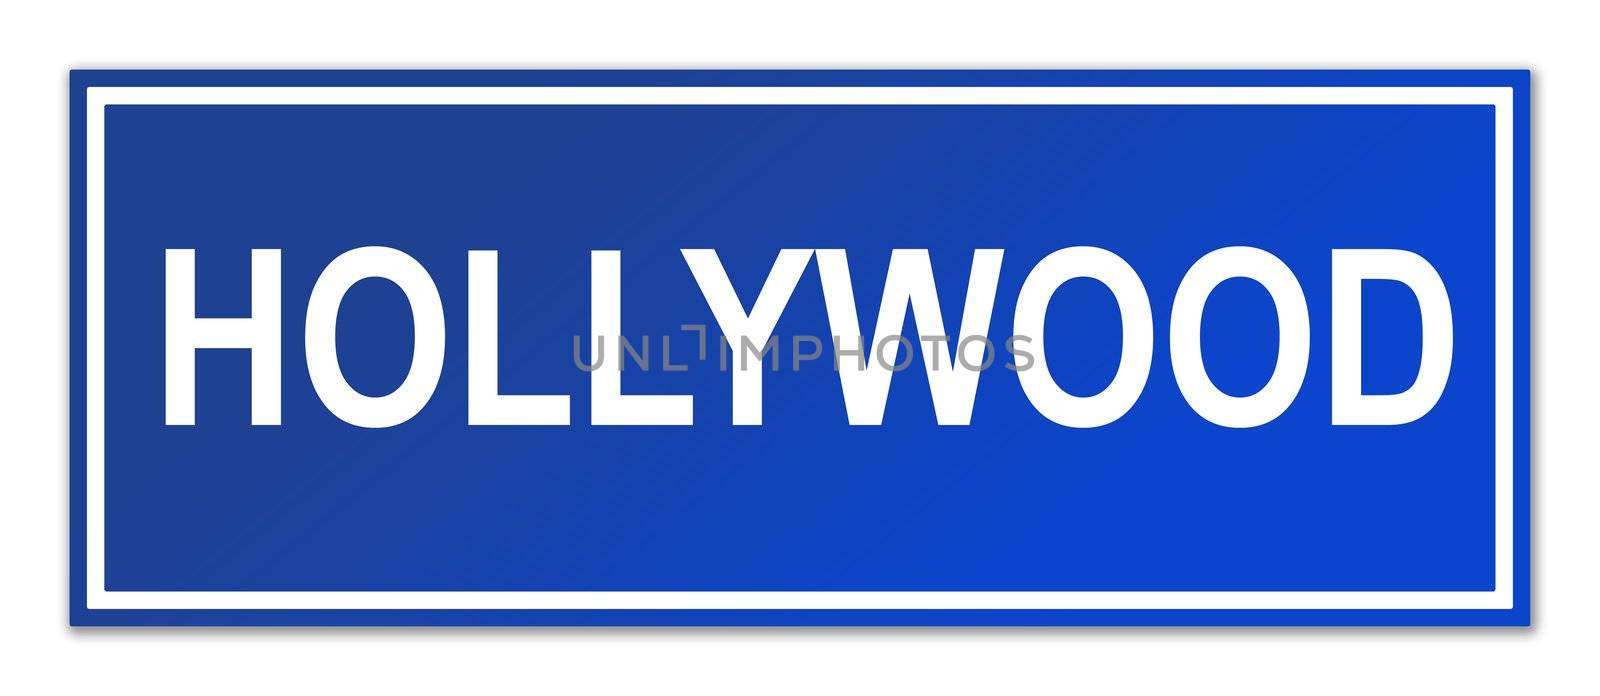 Hollwwood street sign by speedfighter